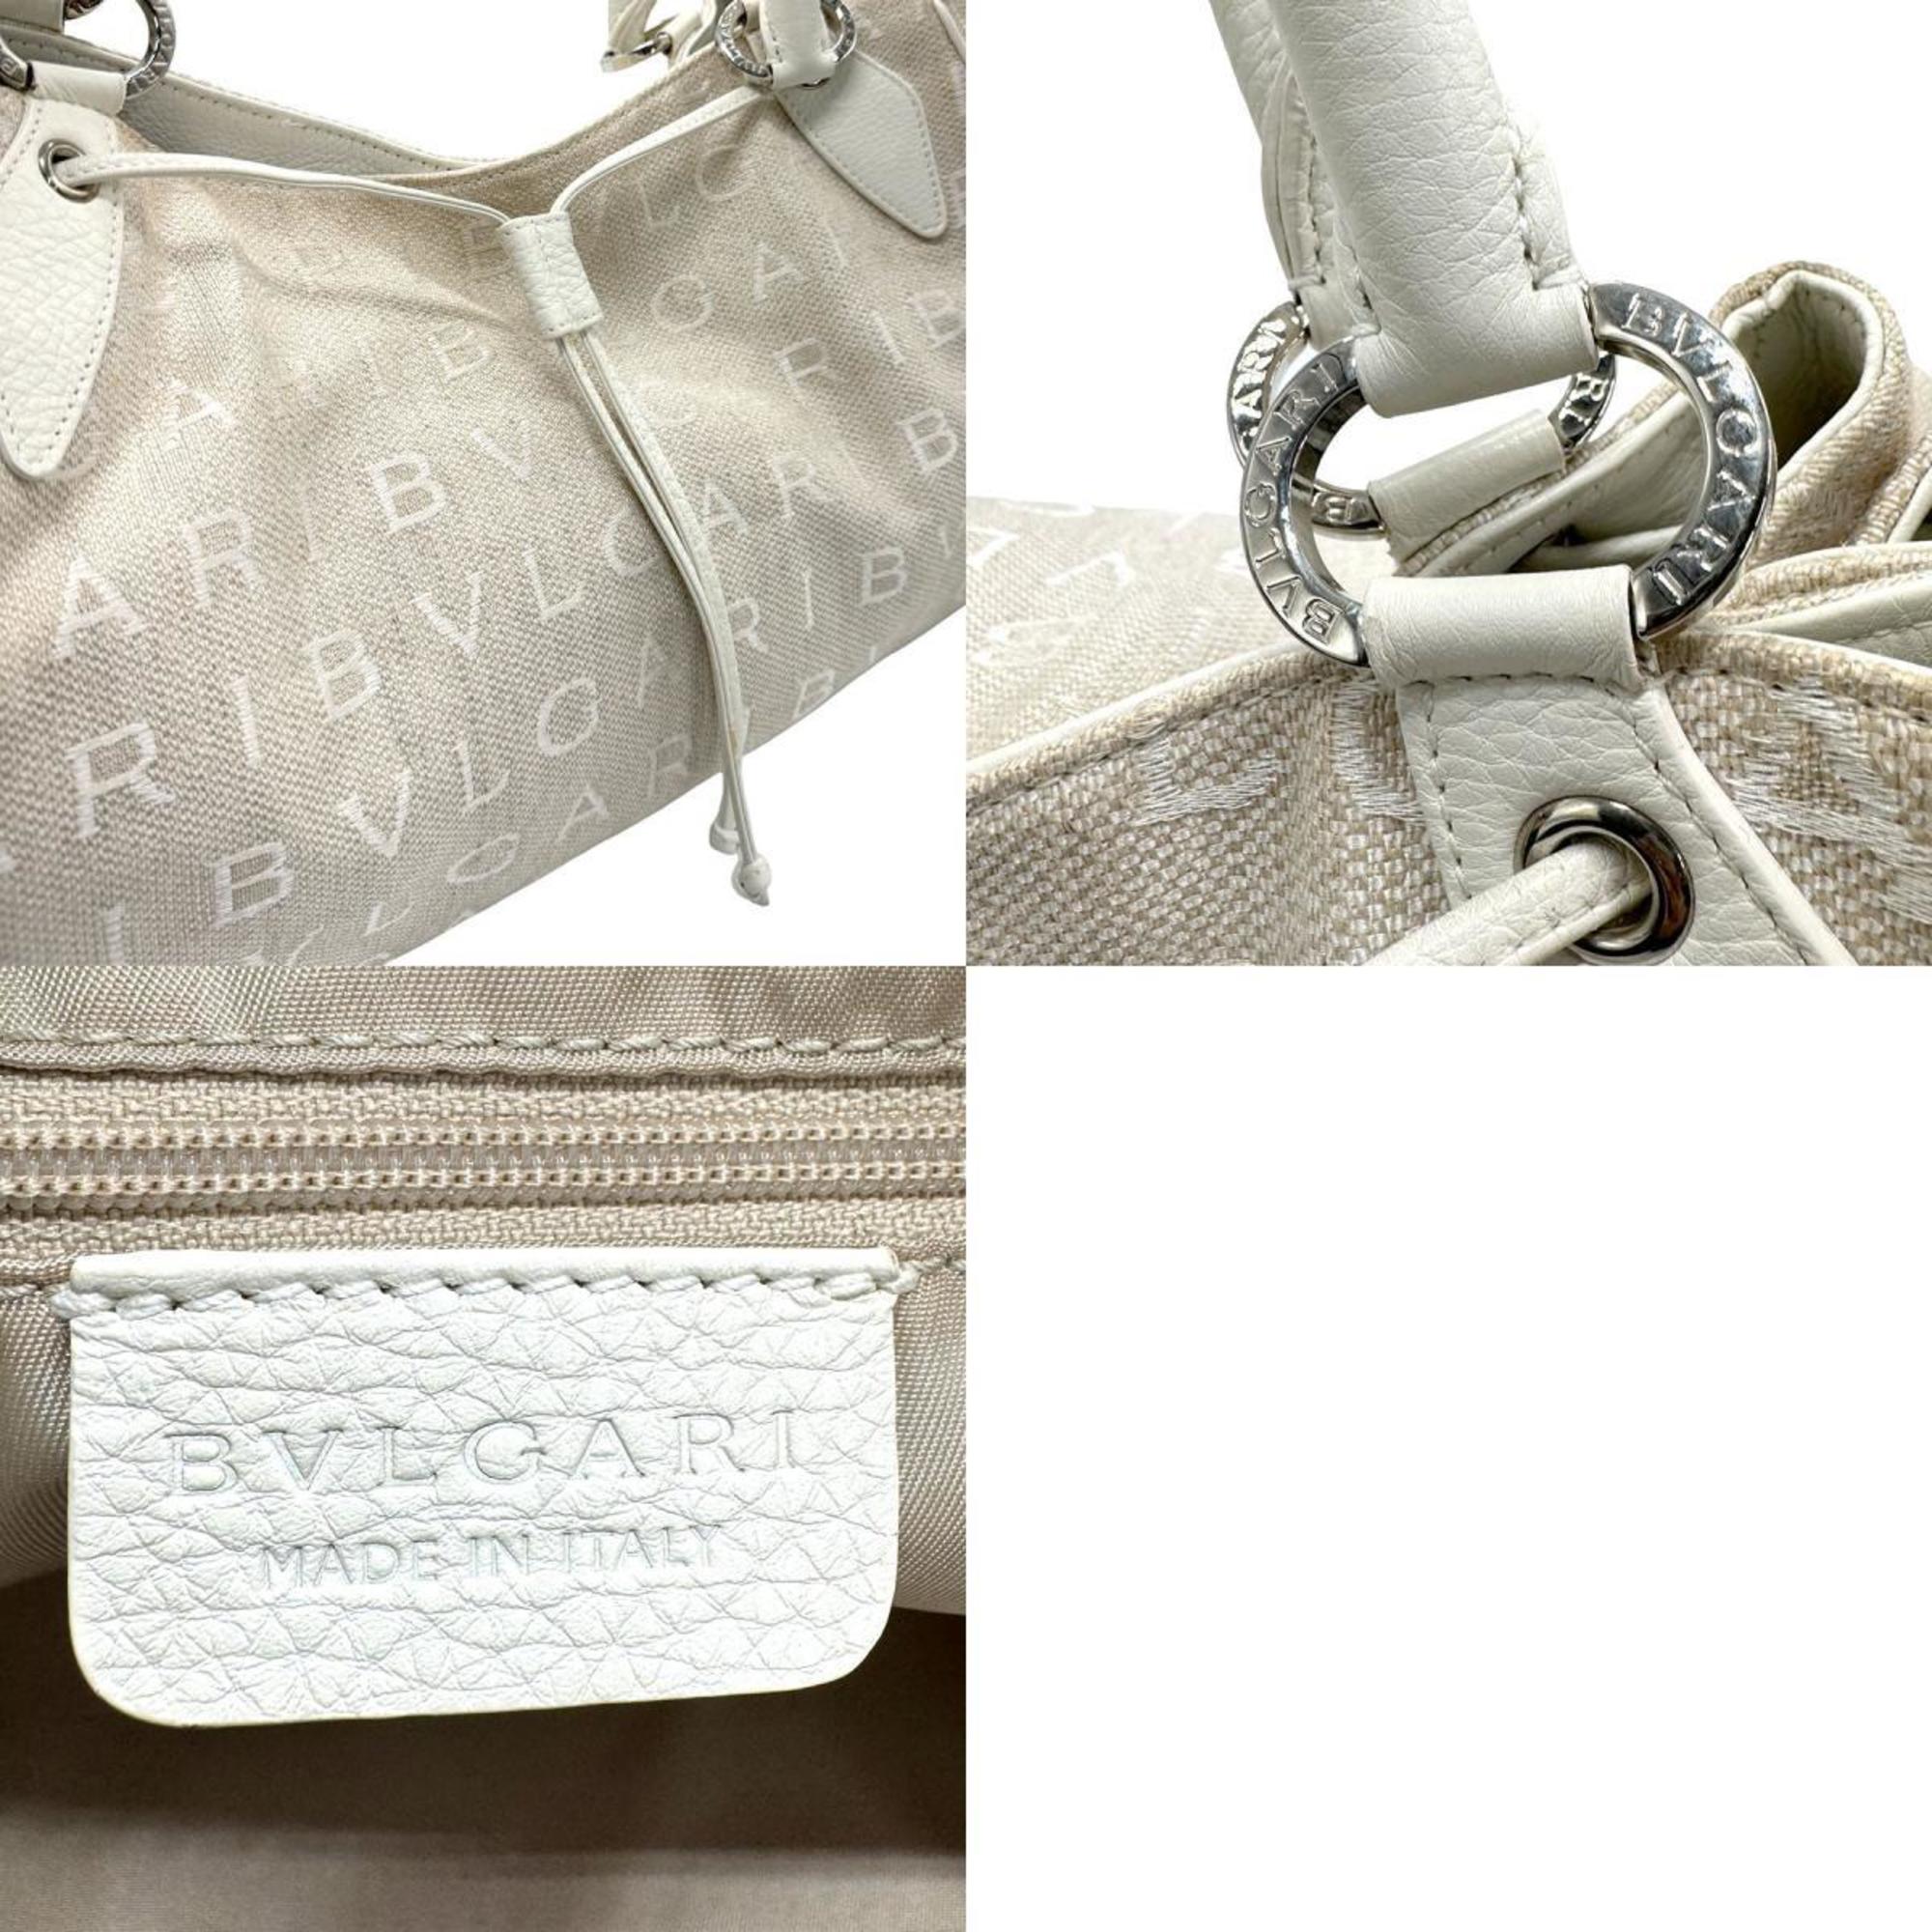 BVLGARI Handbag Canvas Leather Beige Off-White Women's z1045